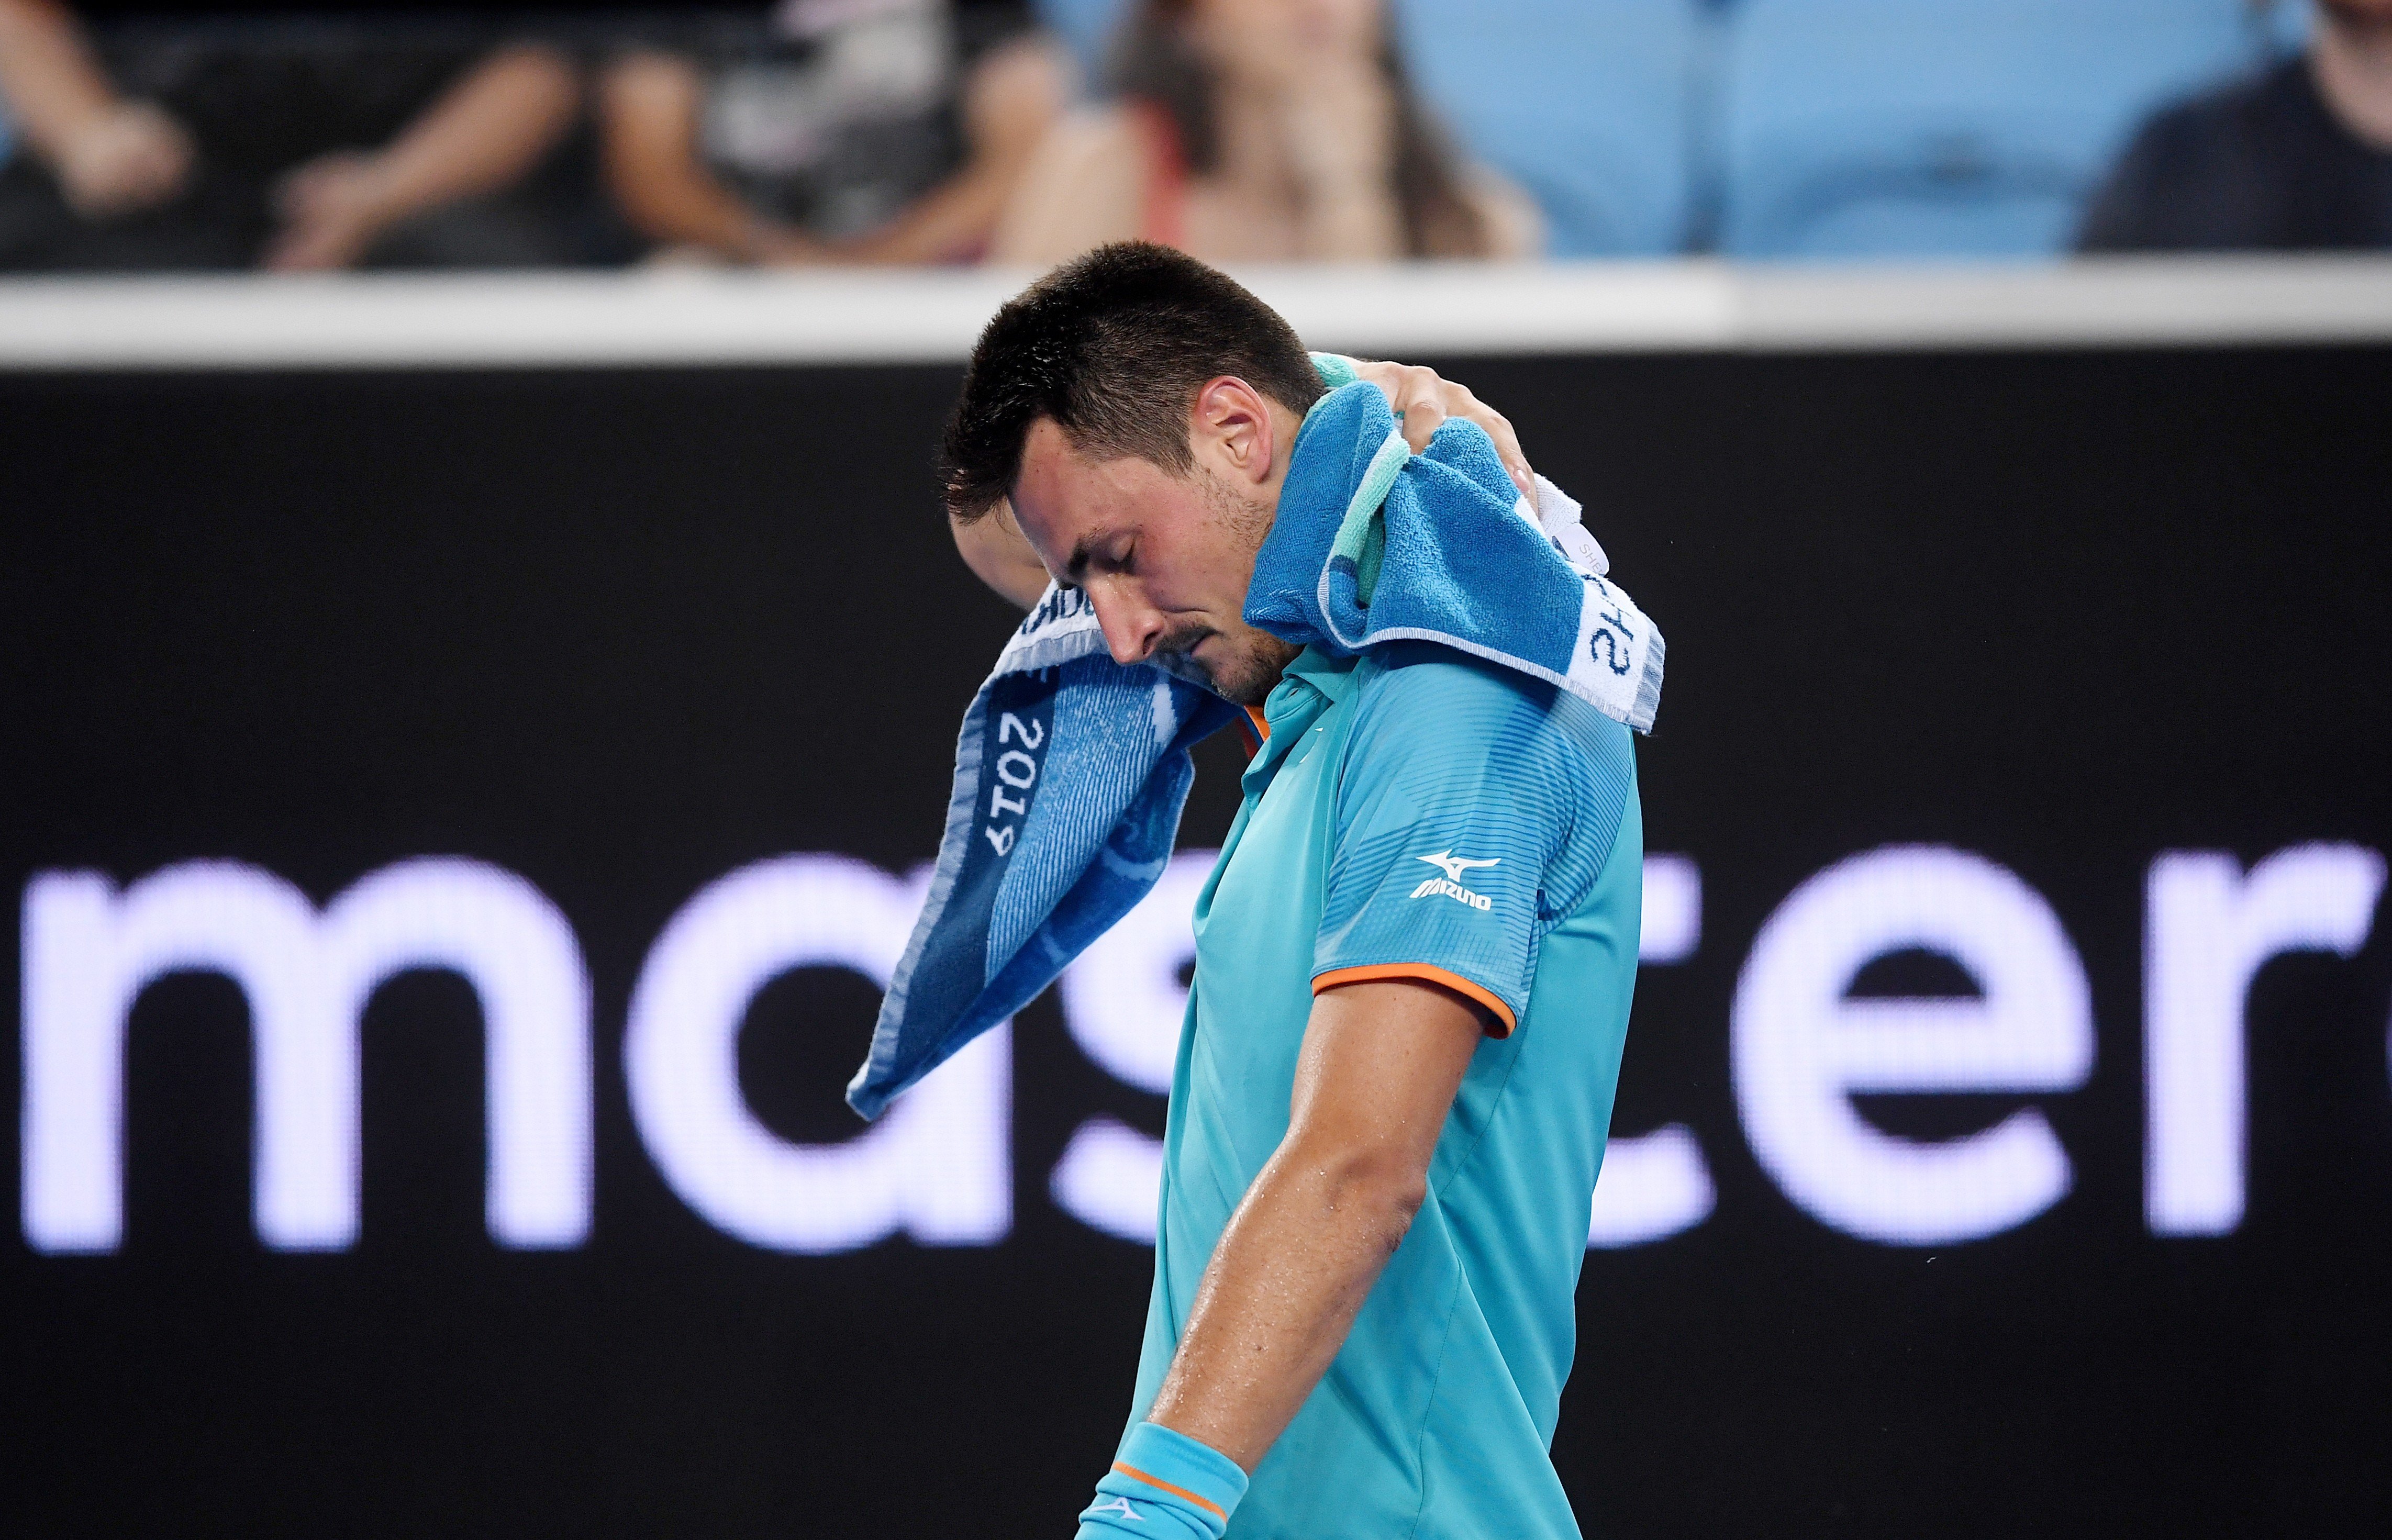 Craig Tiley says Tennis Australia will no longer support Bernard Tomic. Photo: EPA